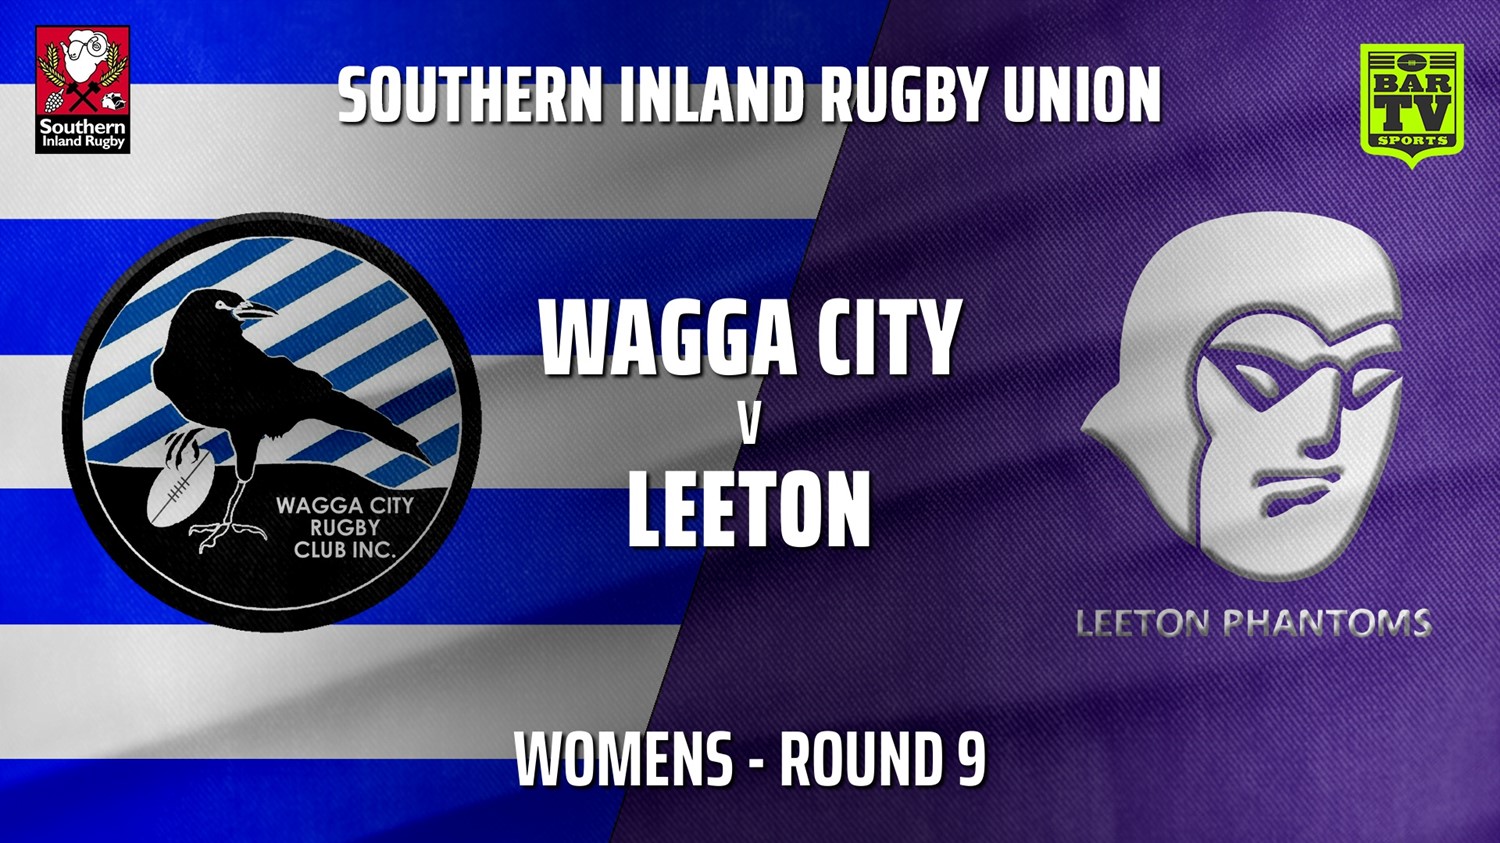 210619-Southern Inland Rugby Union Round 9 - Womens - Wagga City v Leeton Phantoms Slate Image